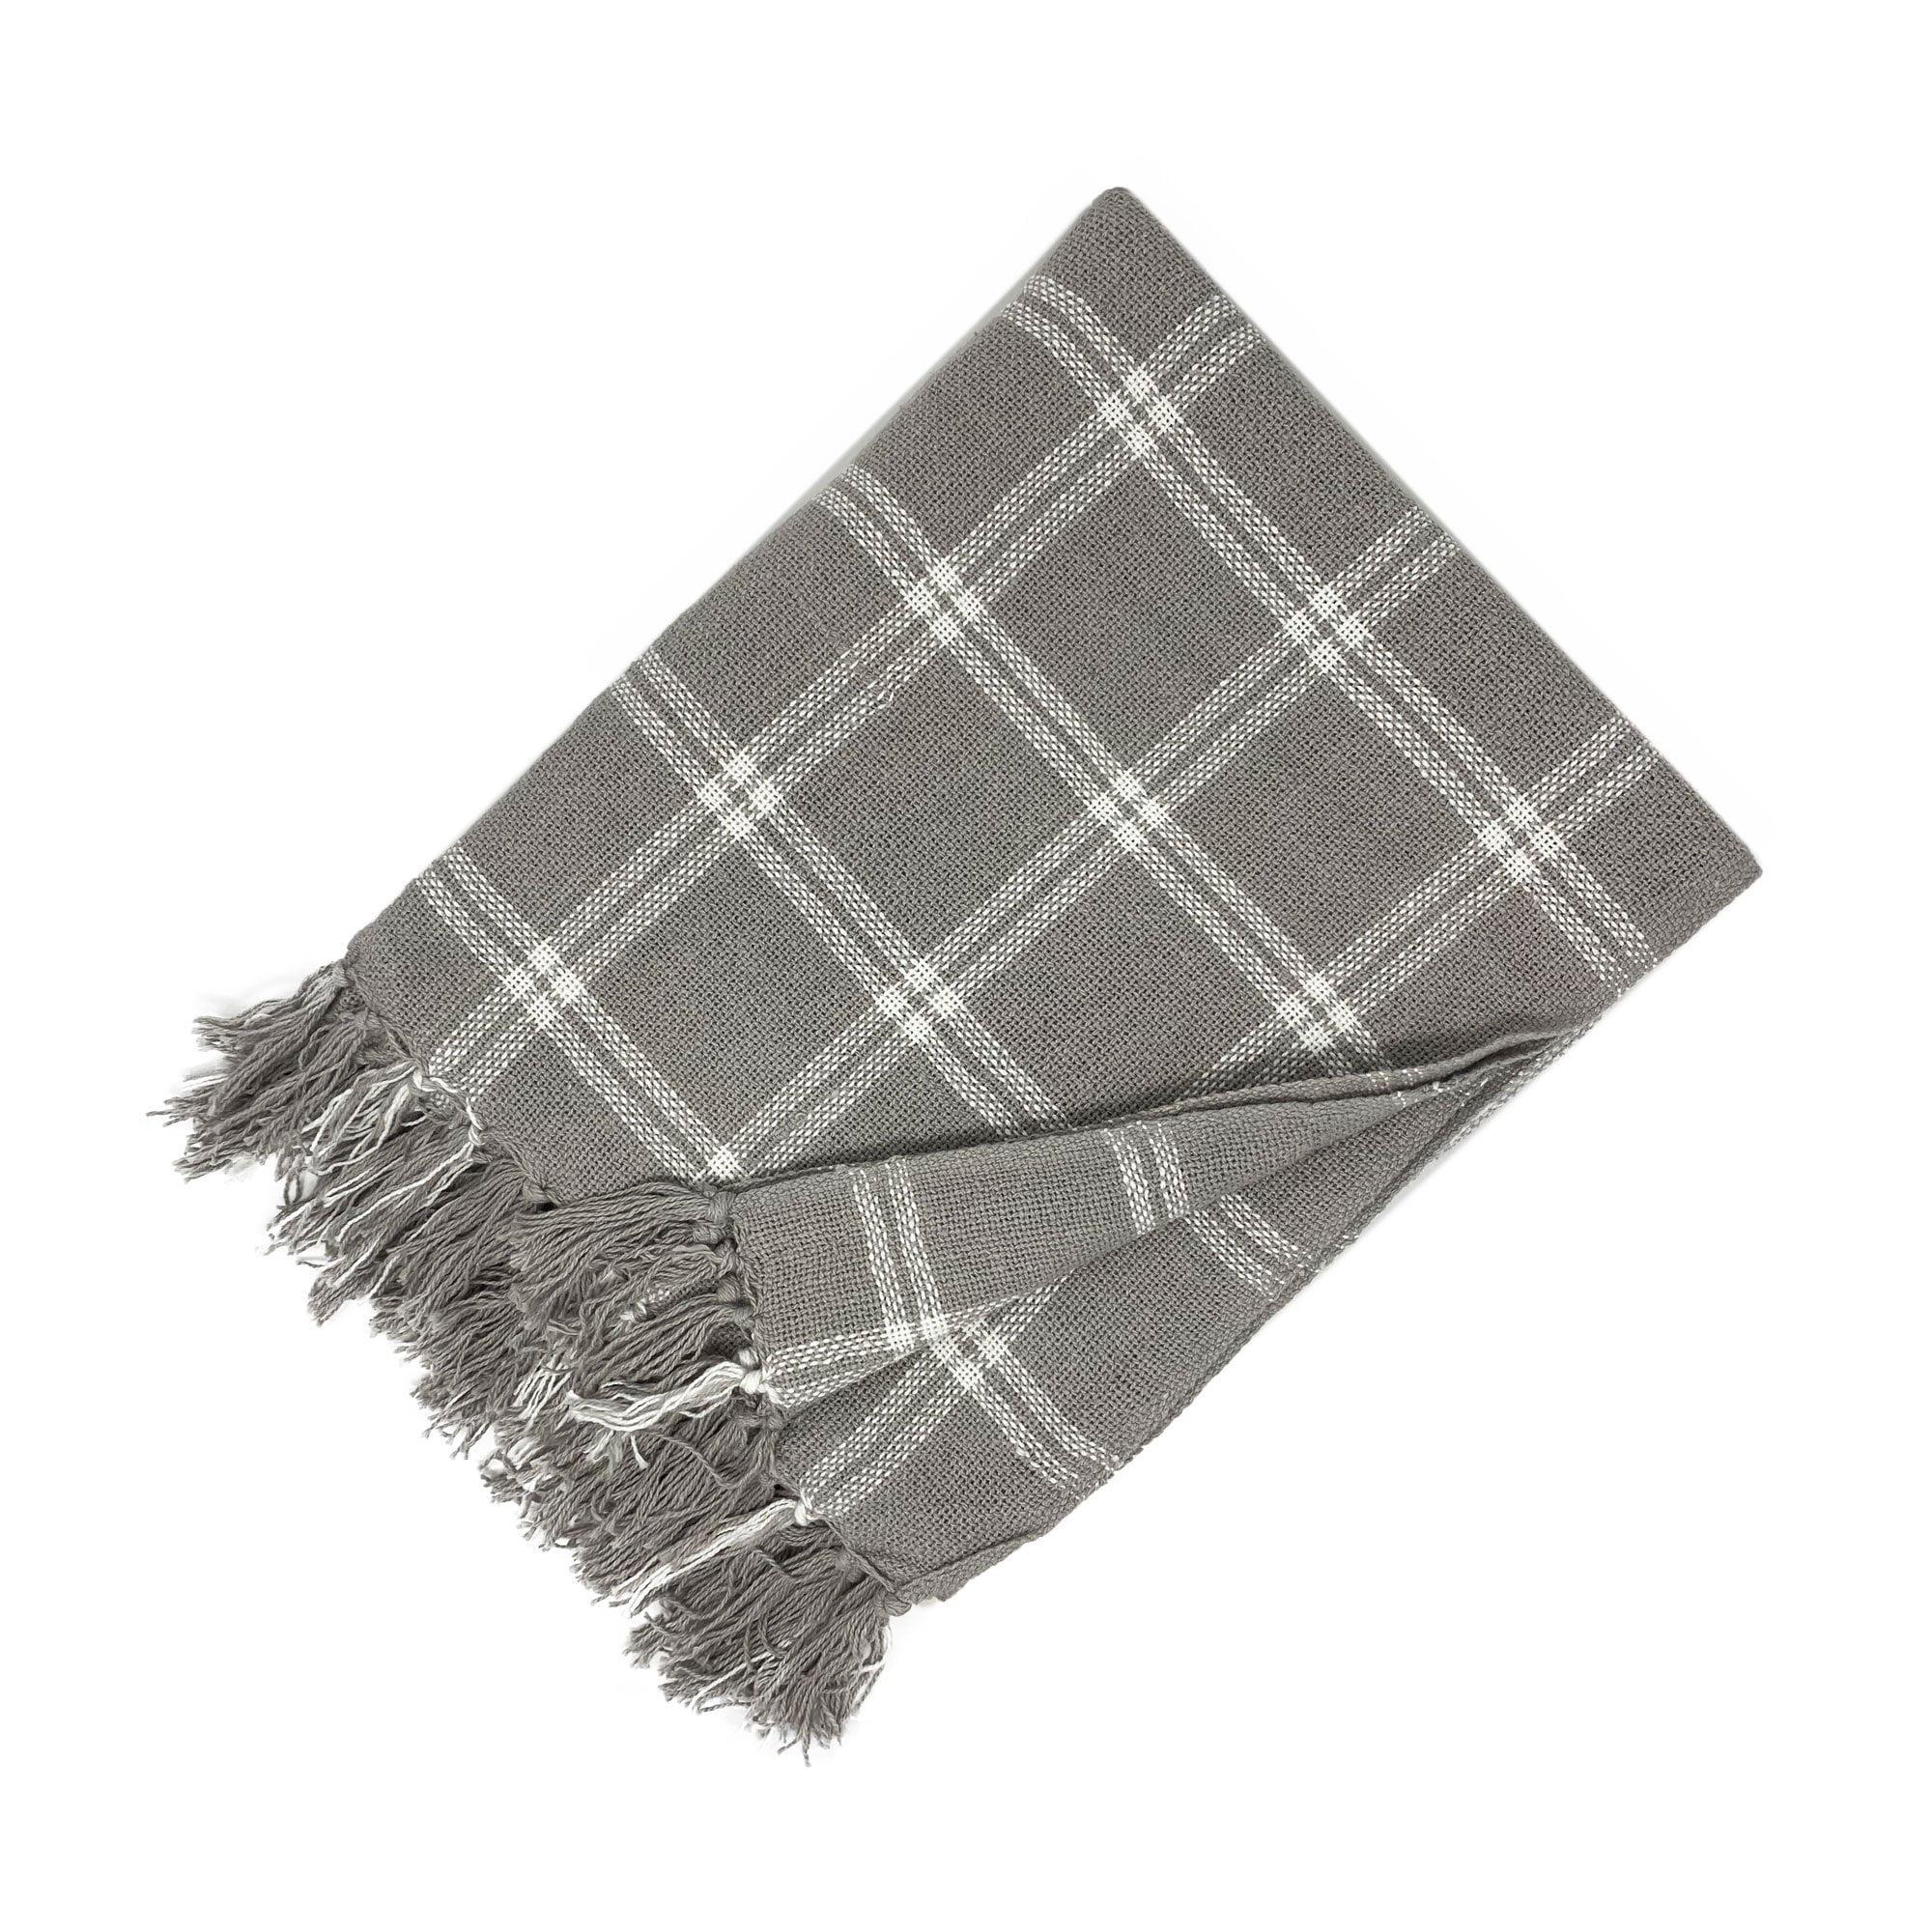 Rustic Windowpane Plaid Cotton Throw Blanket with Fringe - Gray/White